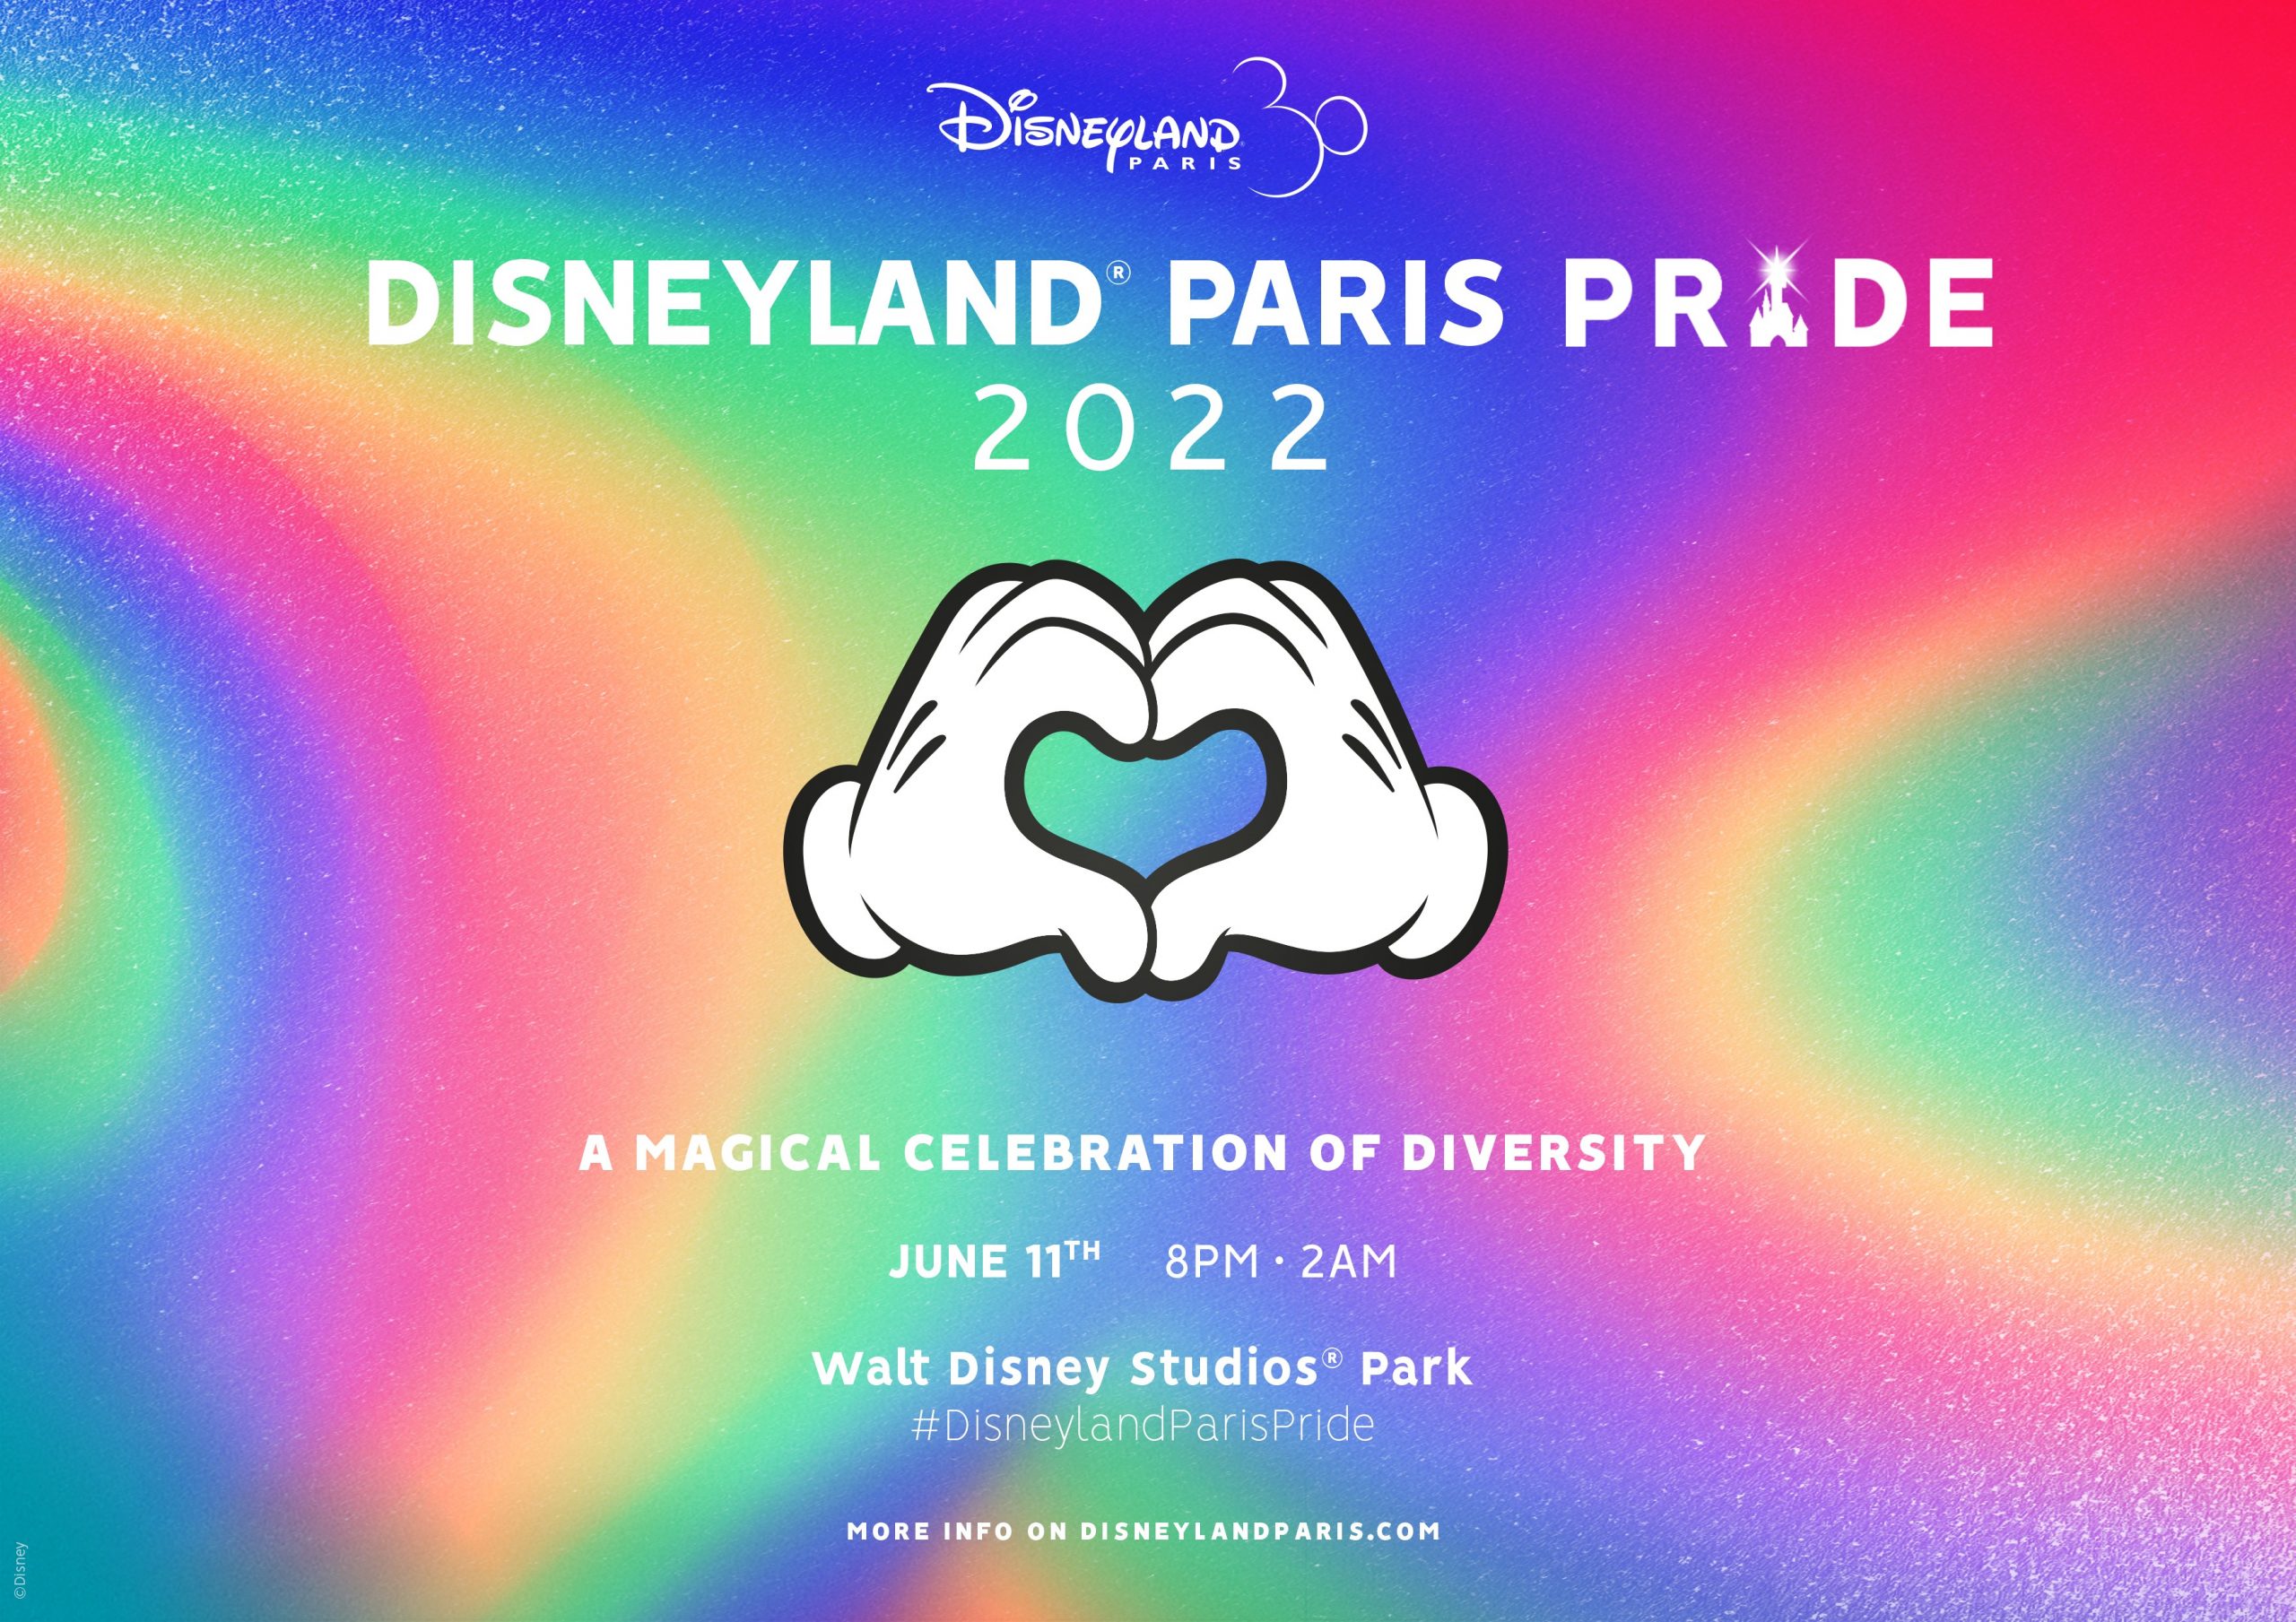 Disneyland Paris Pride Returns June 11, 2022 to Celebrate Diversity